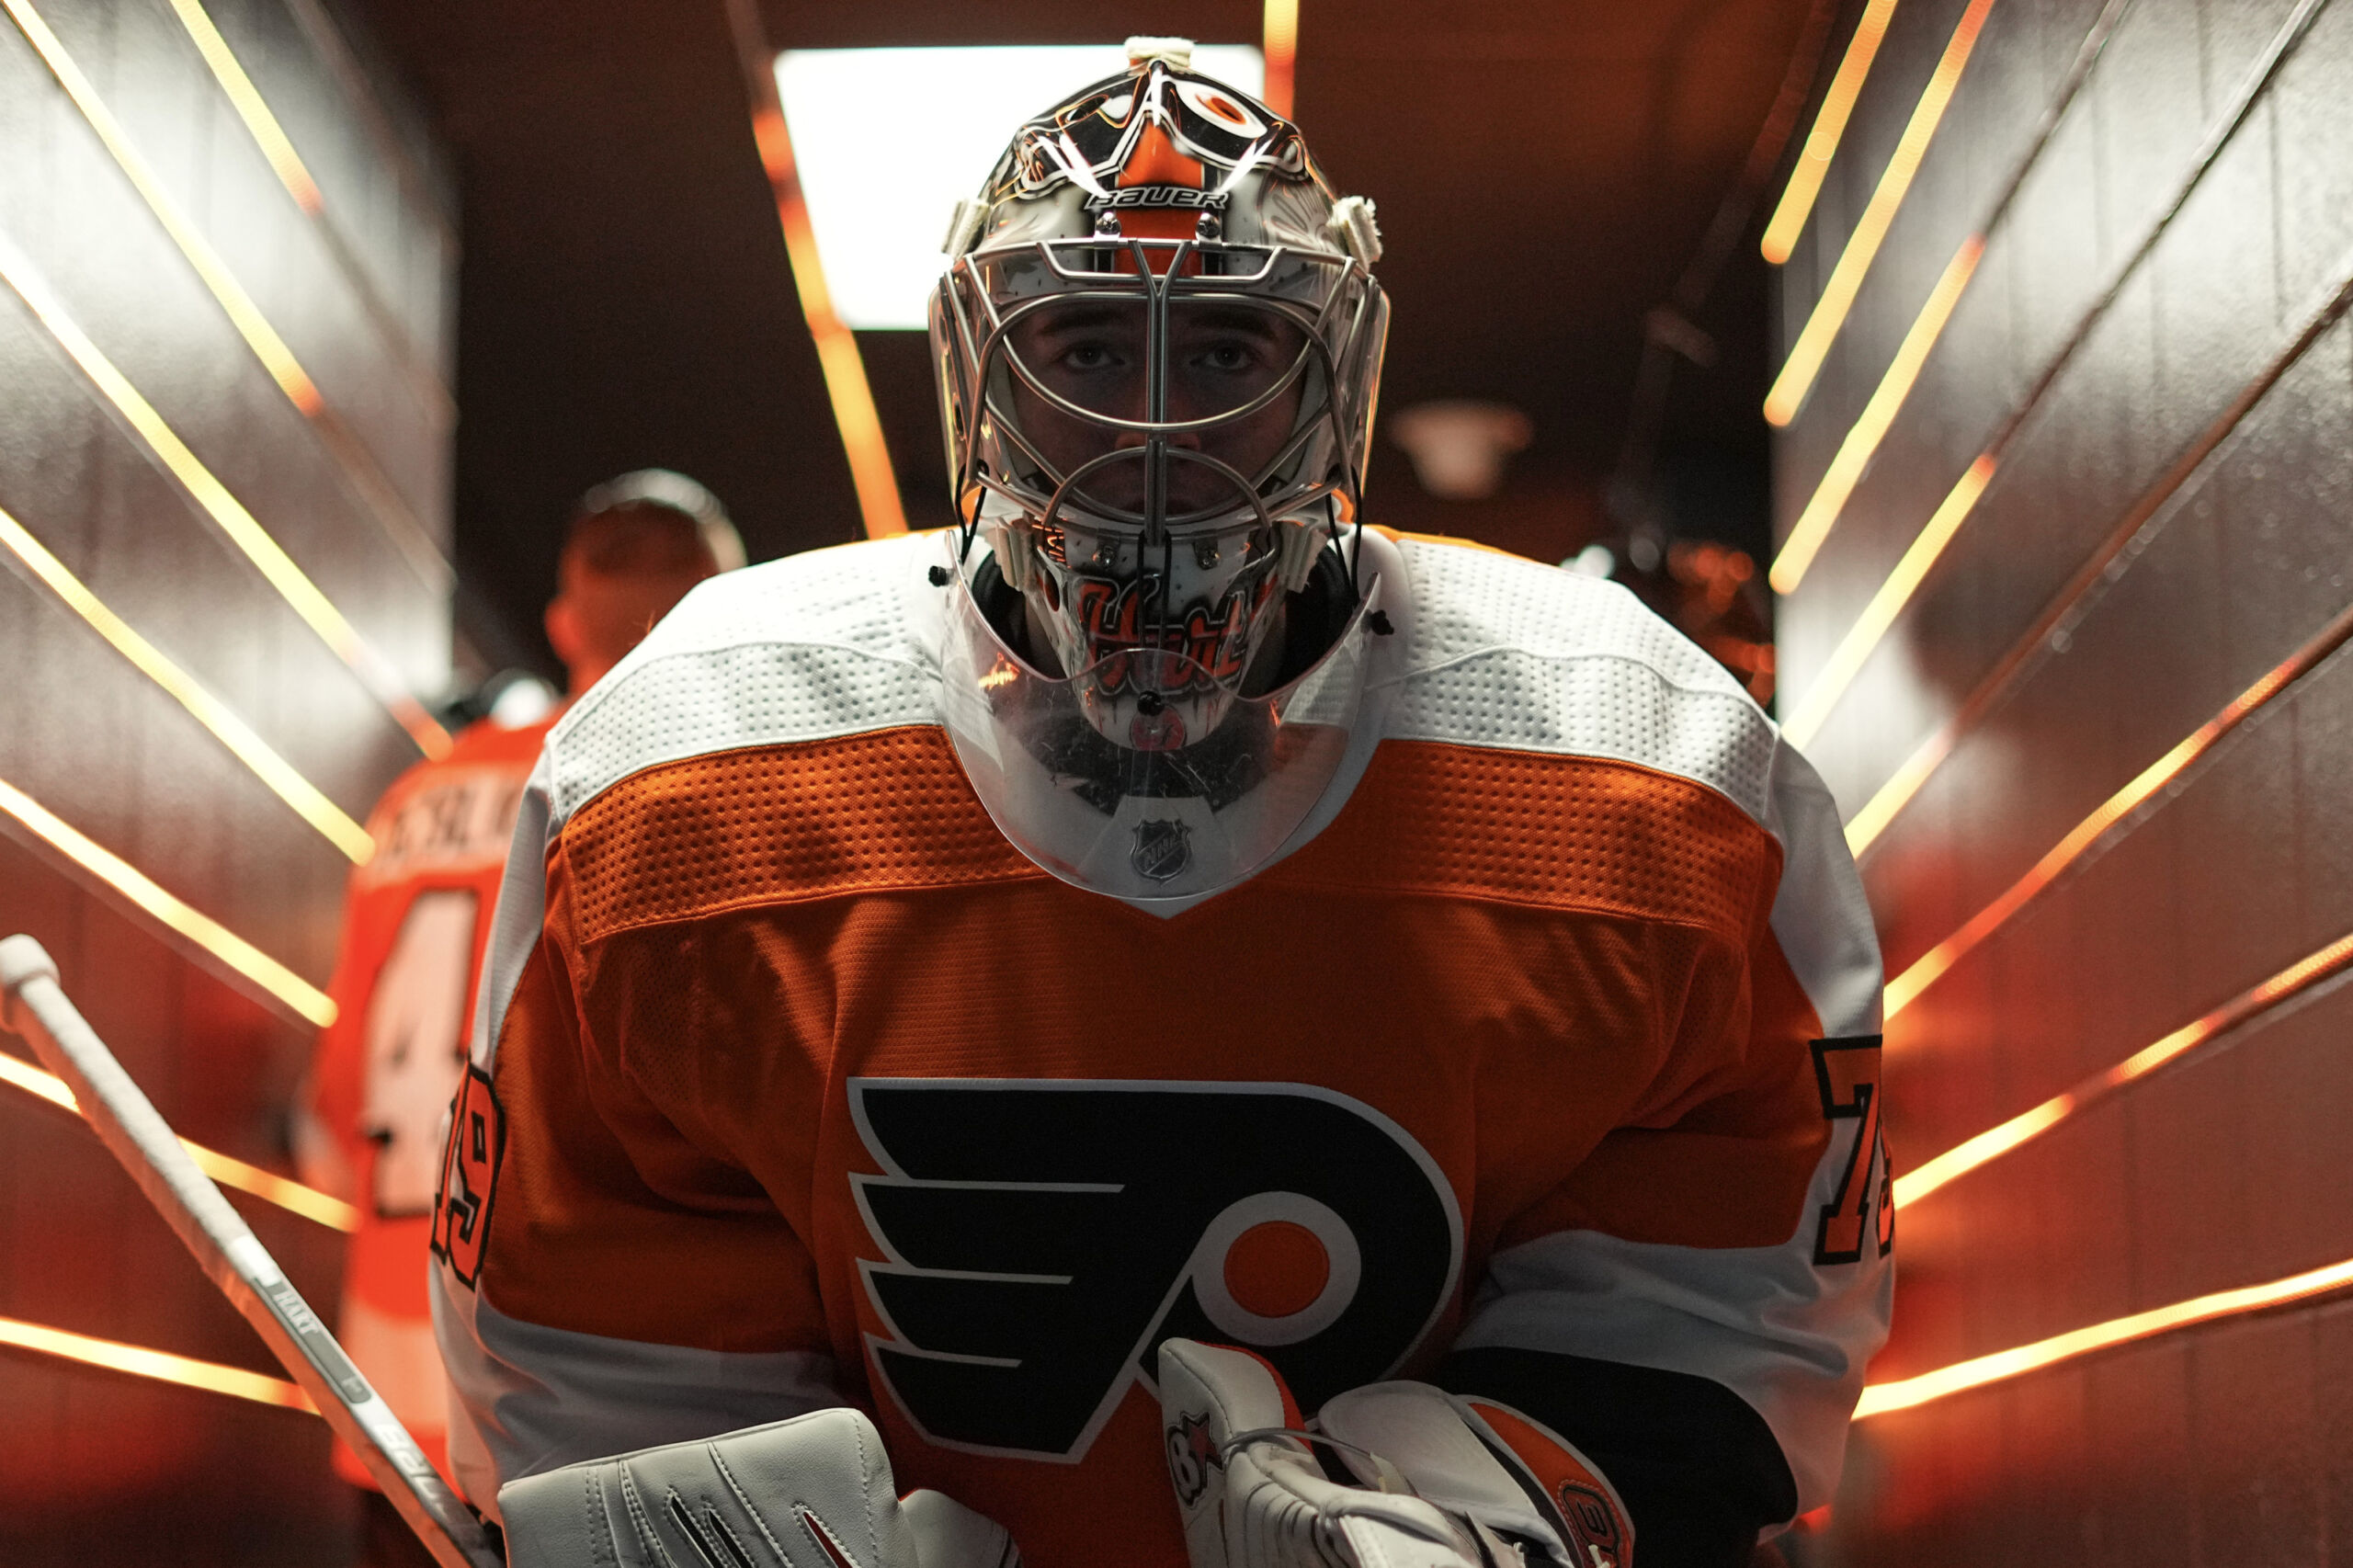 Philadelphia Flyers Sign Goalie Carter Hart To 3-Year Contract Extension -  CBS Philadelphia